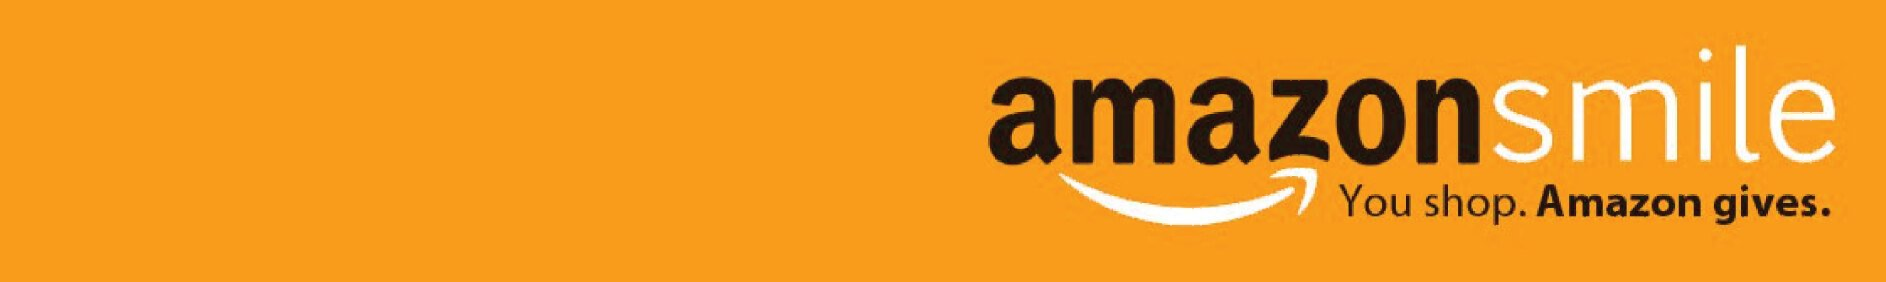 Amazon Smile logo on an orange background